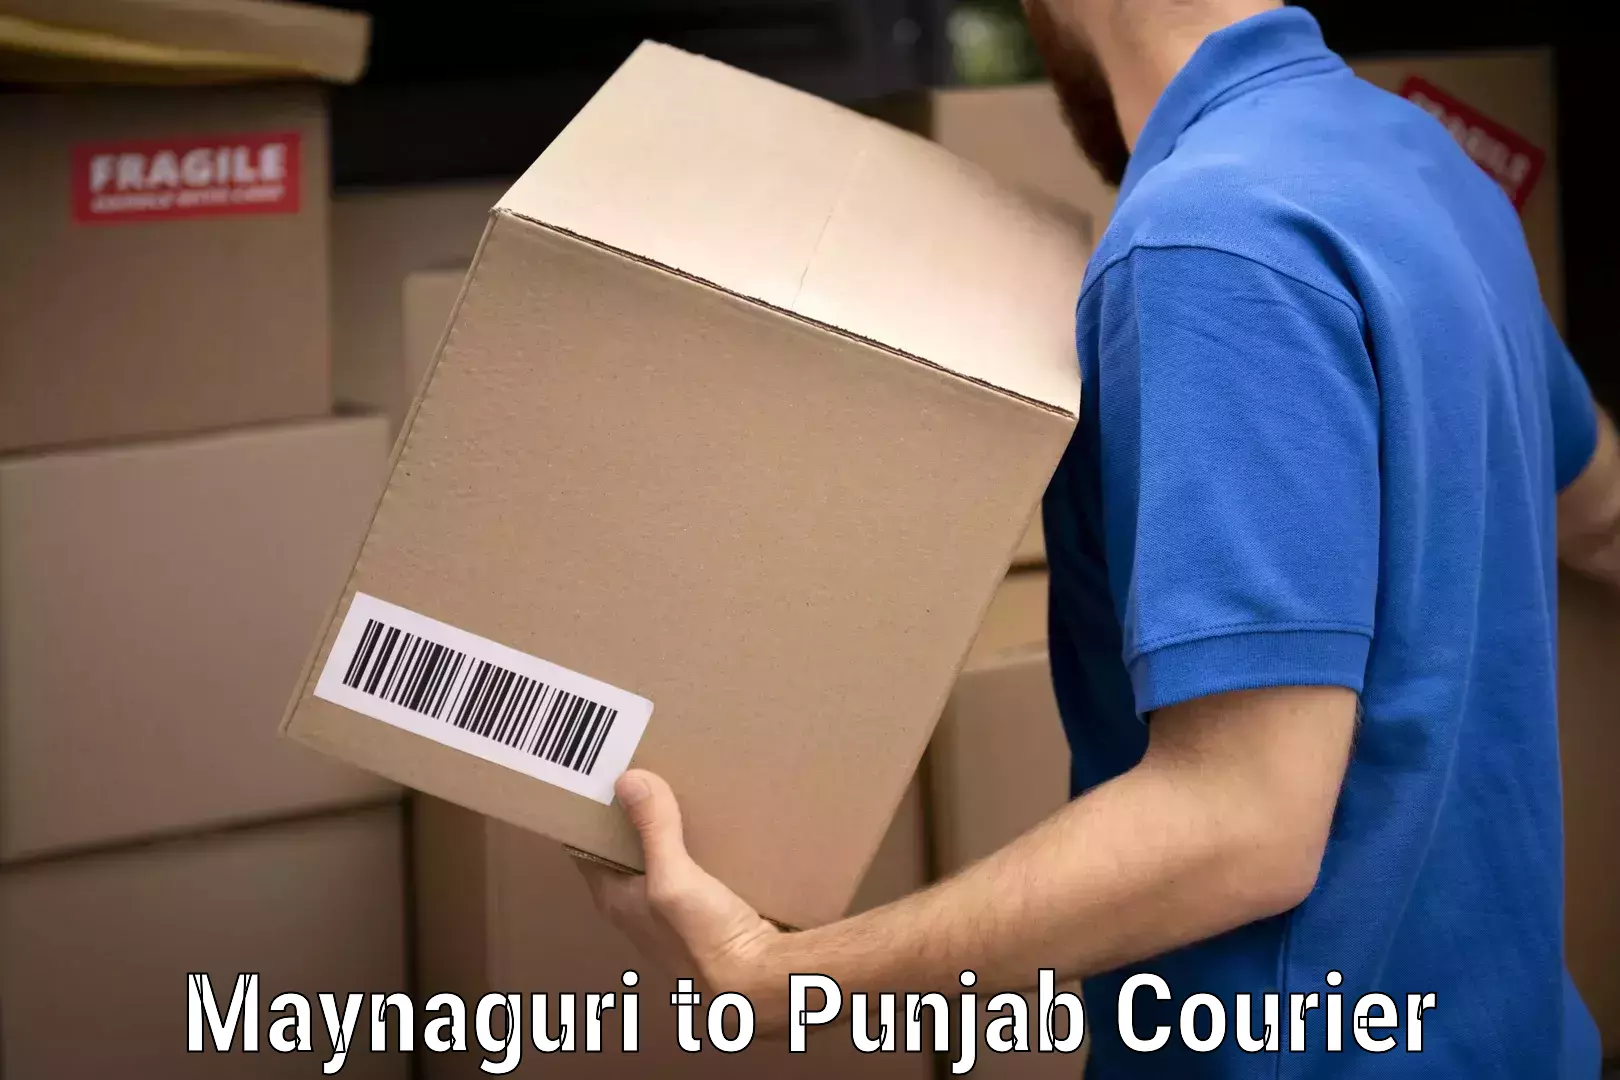 Furniture transport company Maynaguri to Punjab